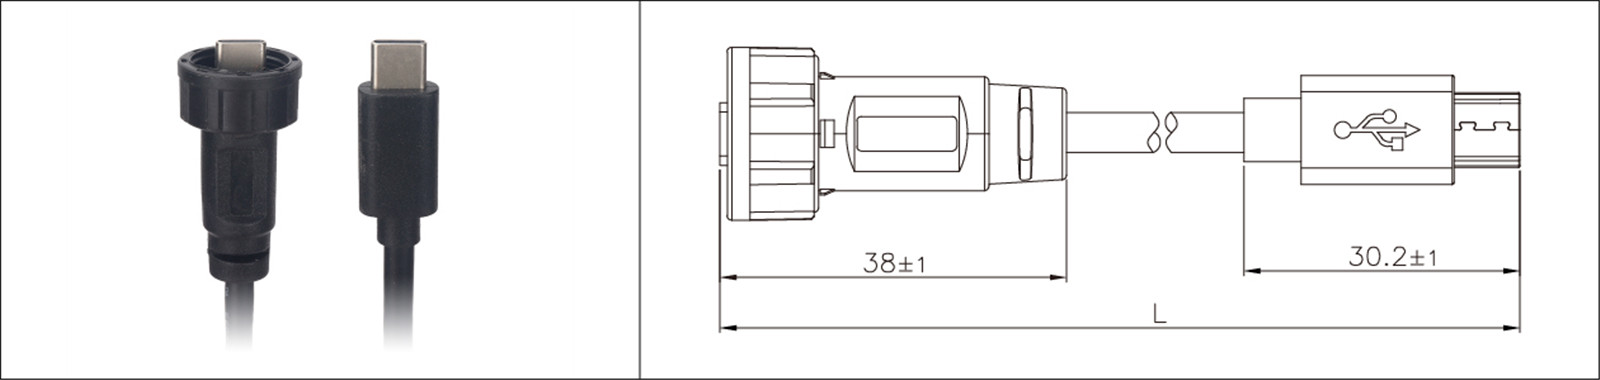 Micro USB tipo de montagem em painel 2.0 3.0 fêmea e macho à prova d'água IP67 cabo de extensão overmold industrial connecto-02 (7)